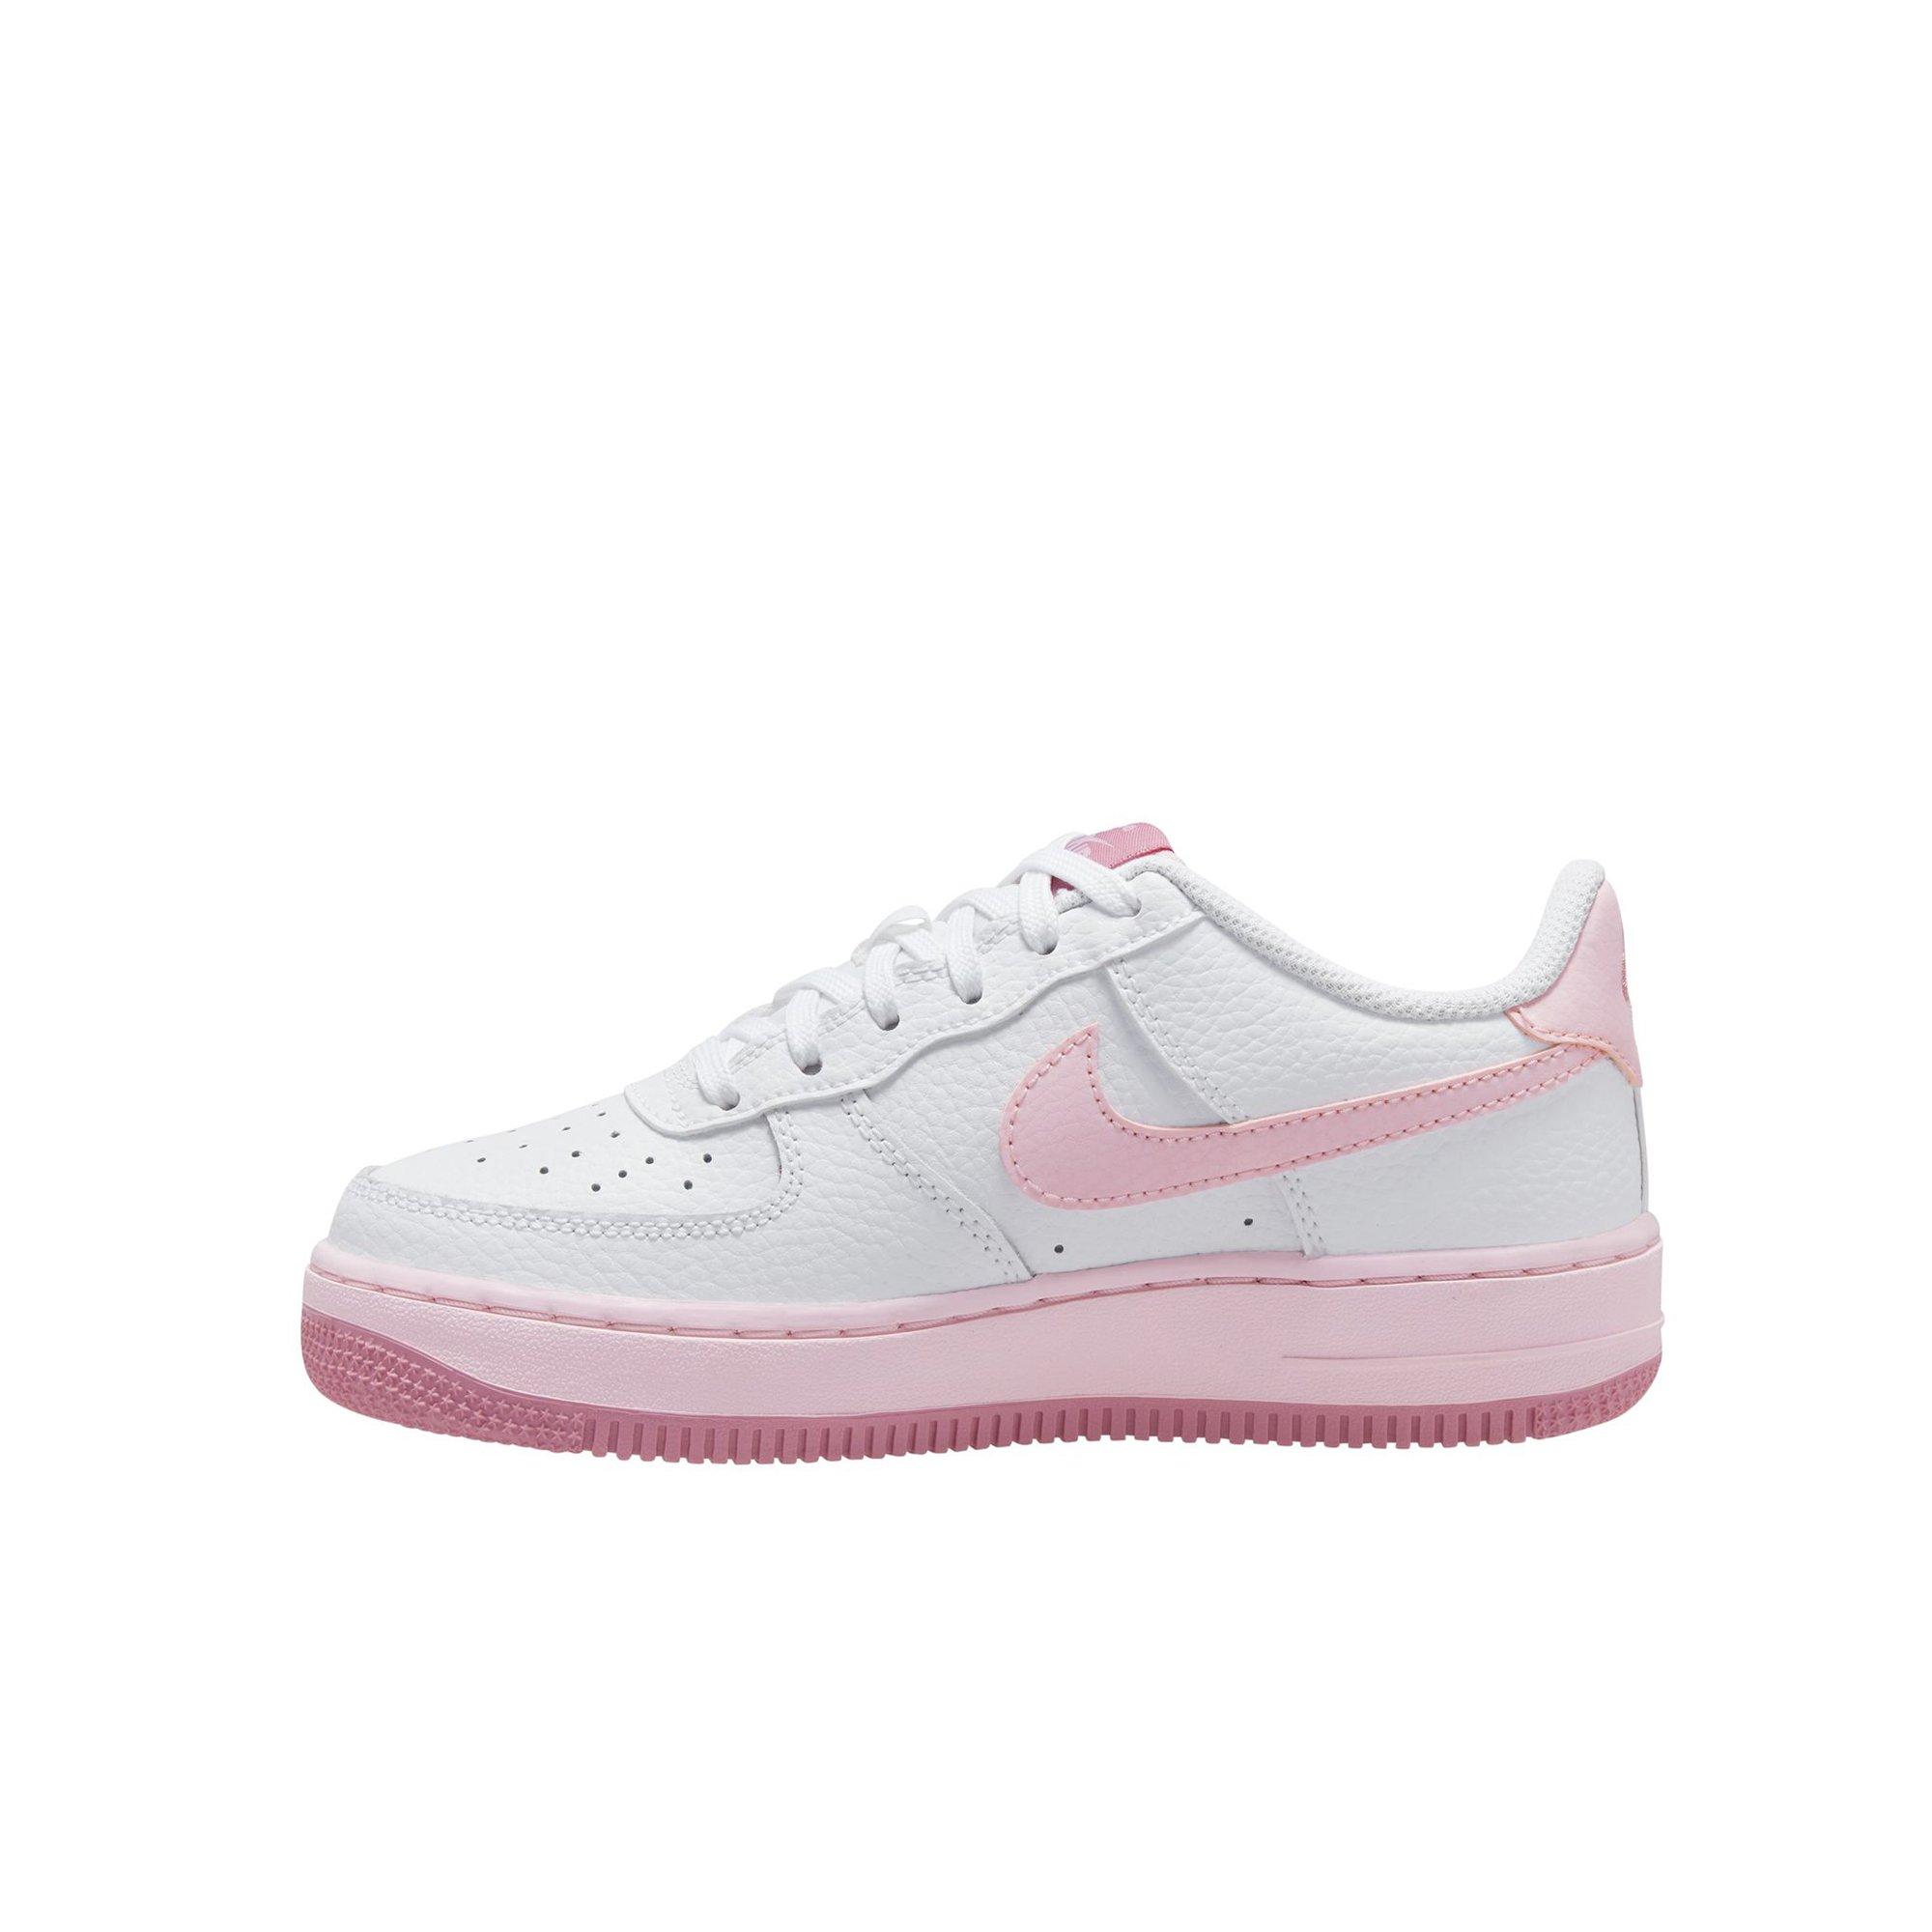 pink foam air force 1s